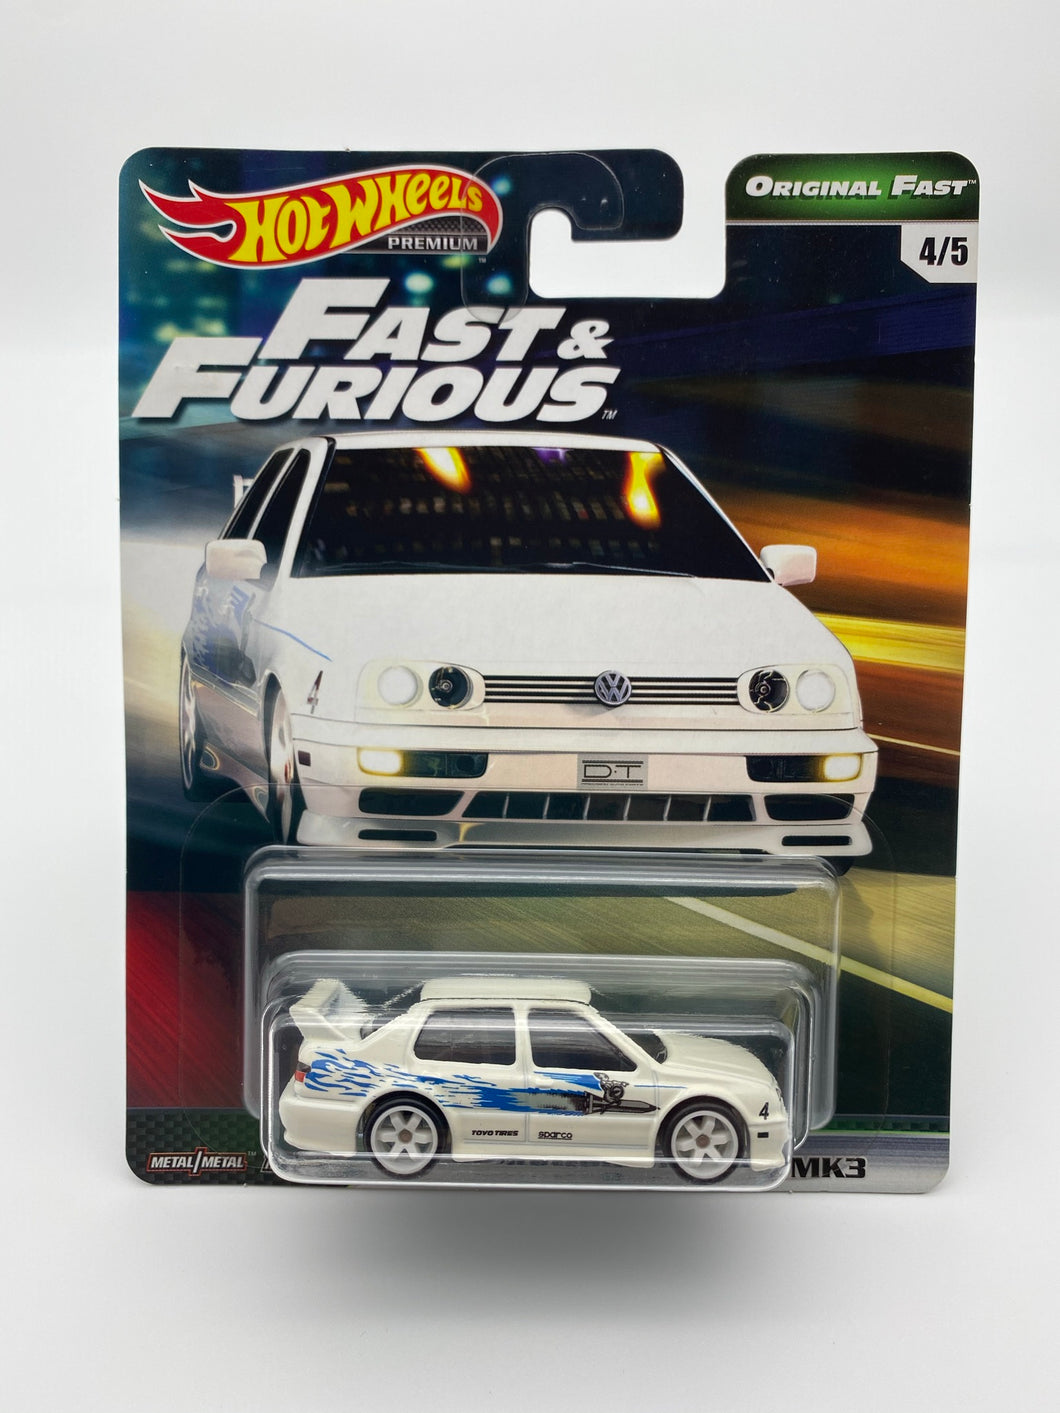 Hot Wheels Premium Car Culture - Fast & Furious Mix 2 Original Fast - Volkswagen Jetta MK3 (Japanese Card) - GBW85